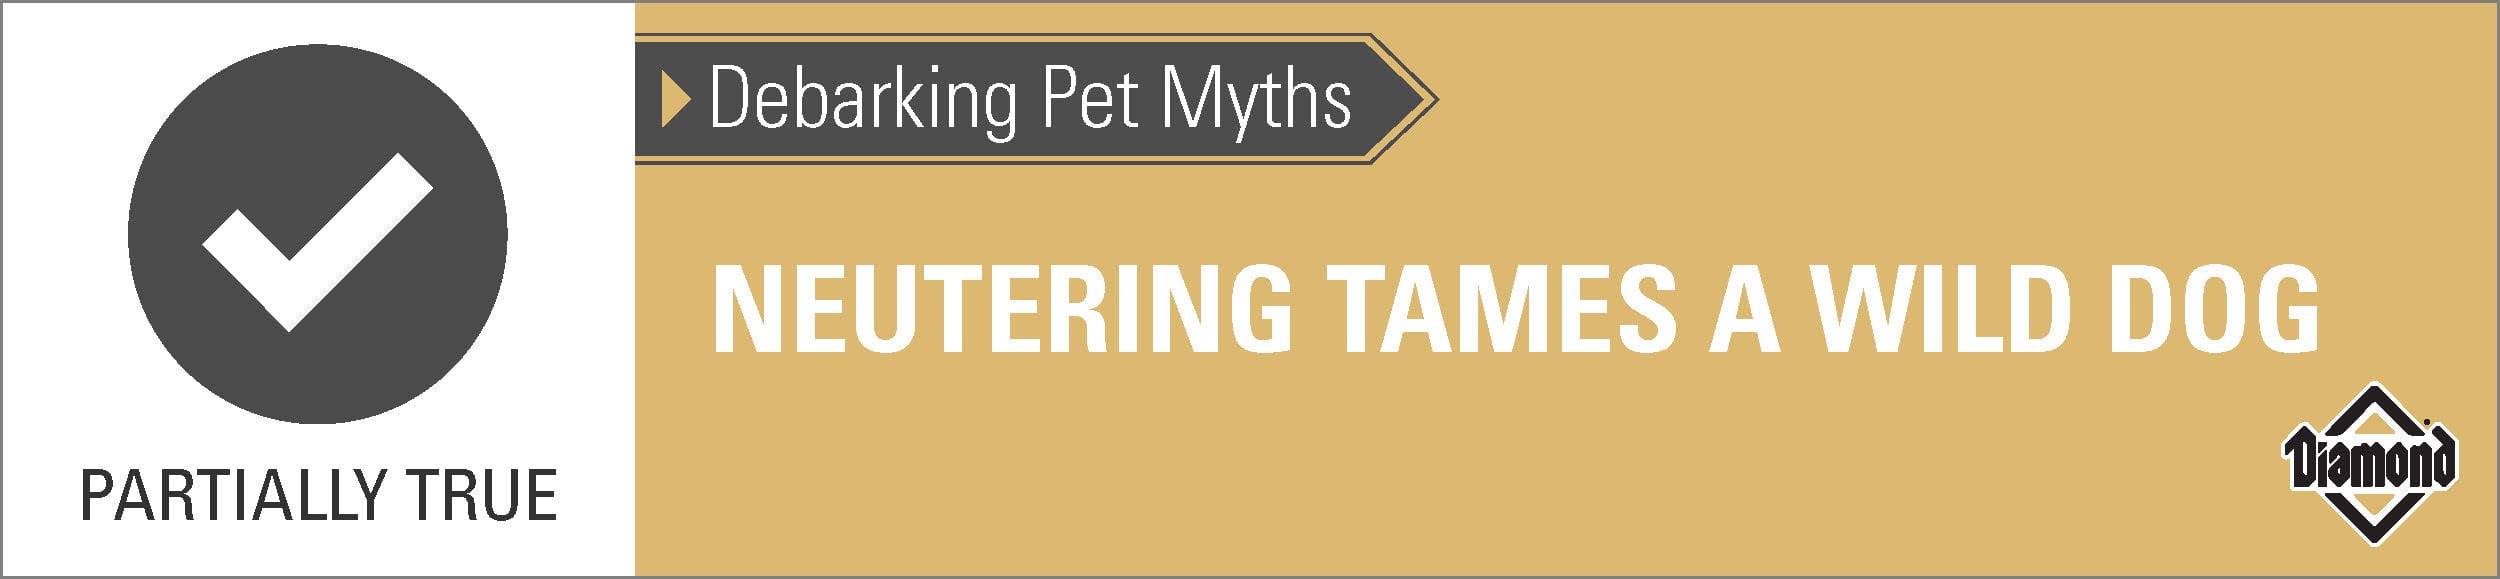 Partially True: Neutering Tames a Wild Dog | Diamond Pet Foods